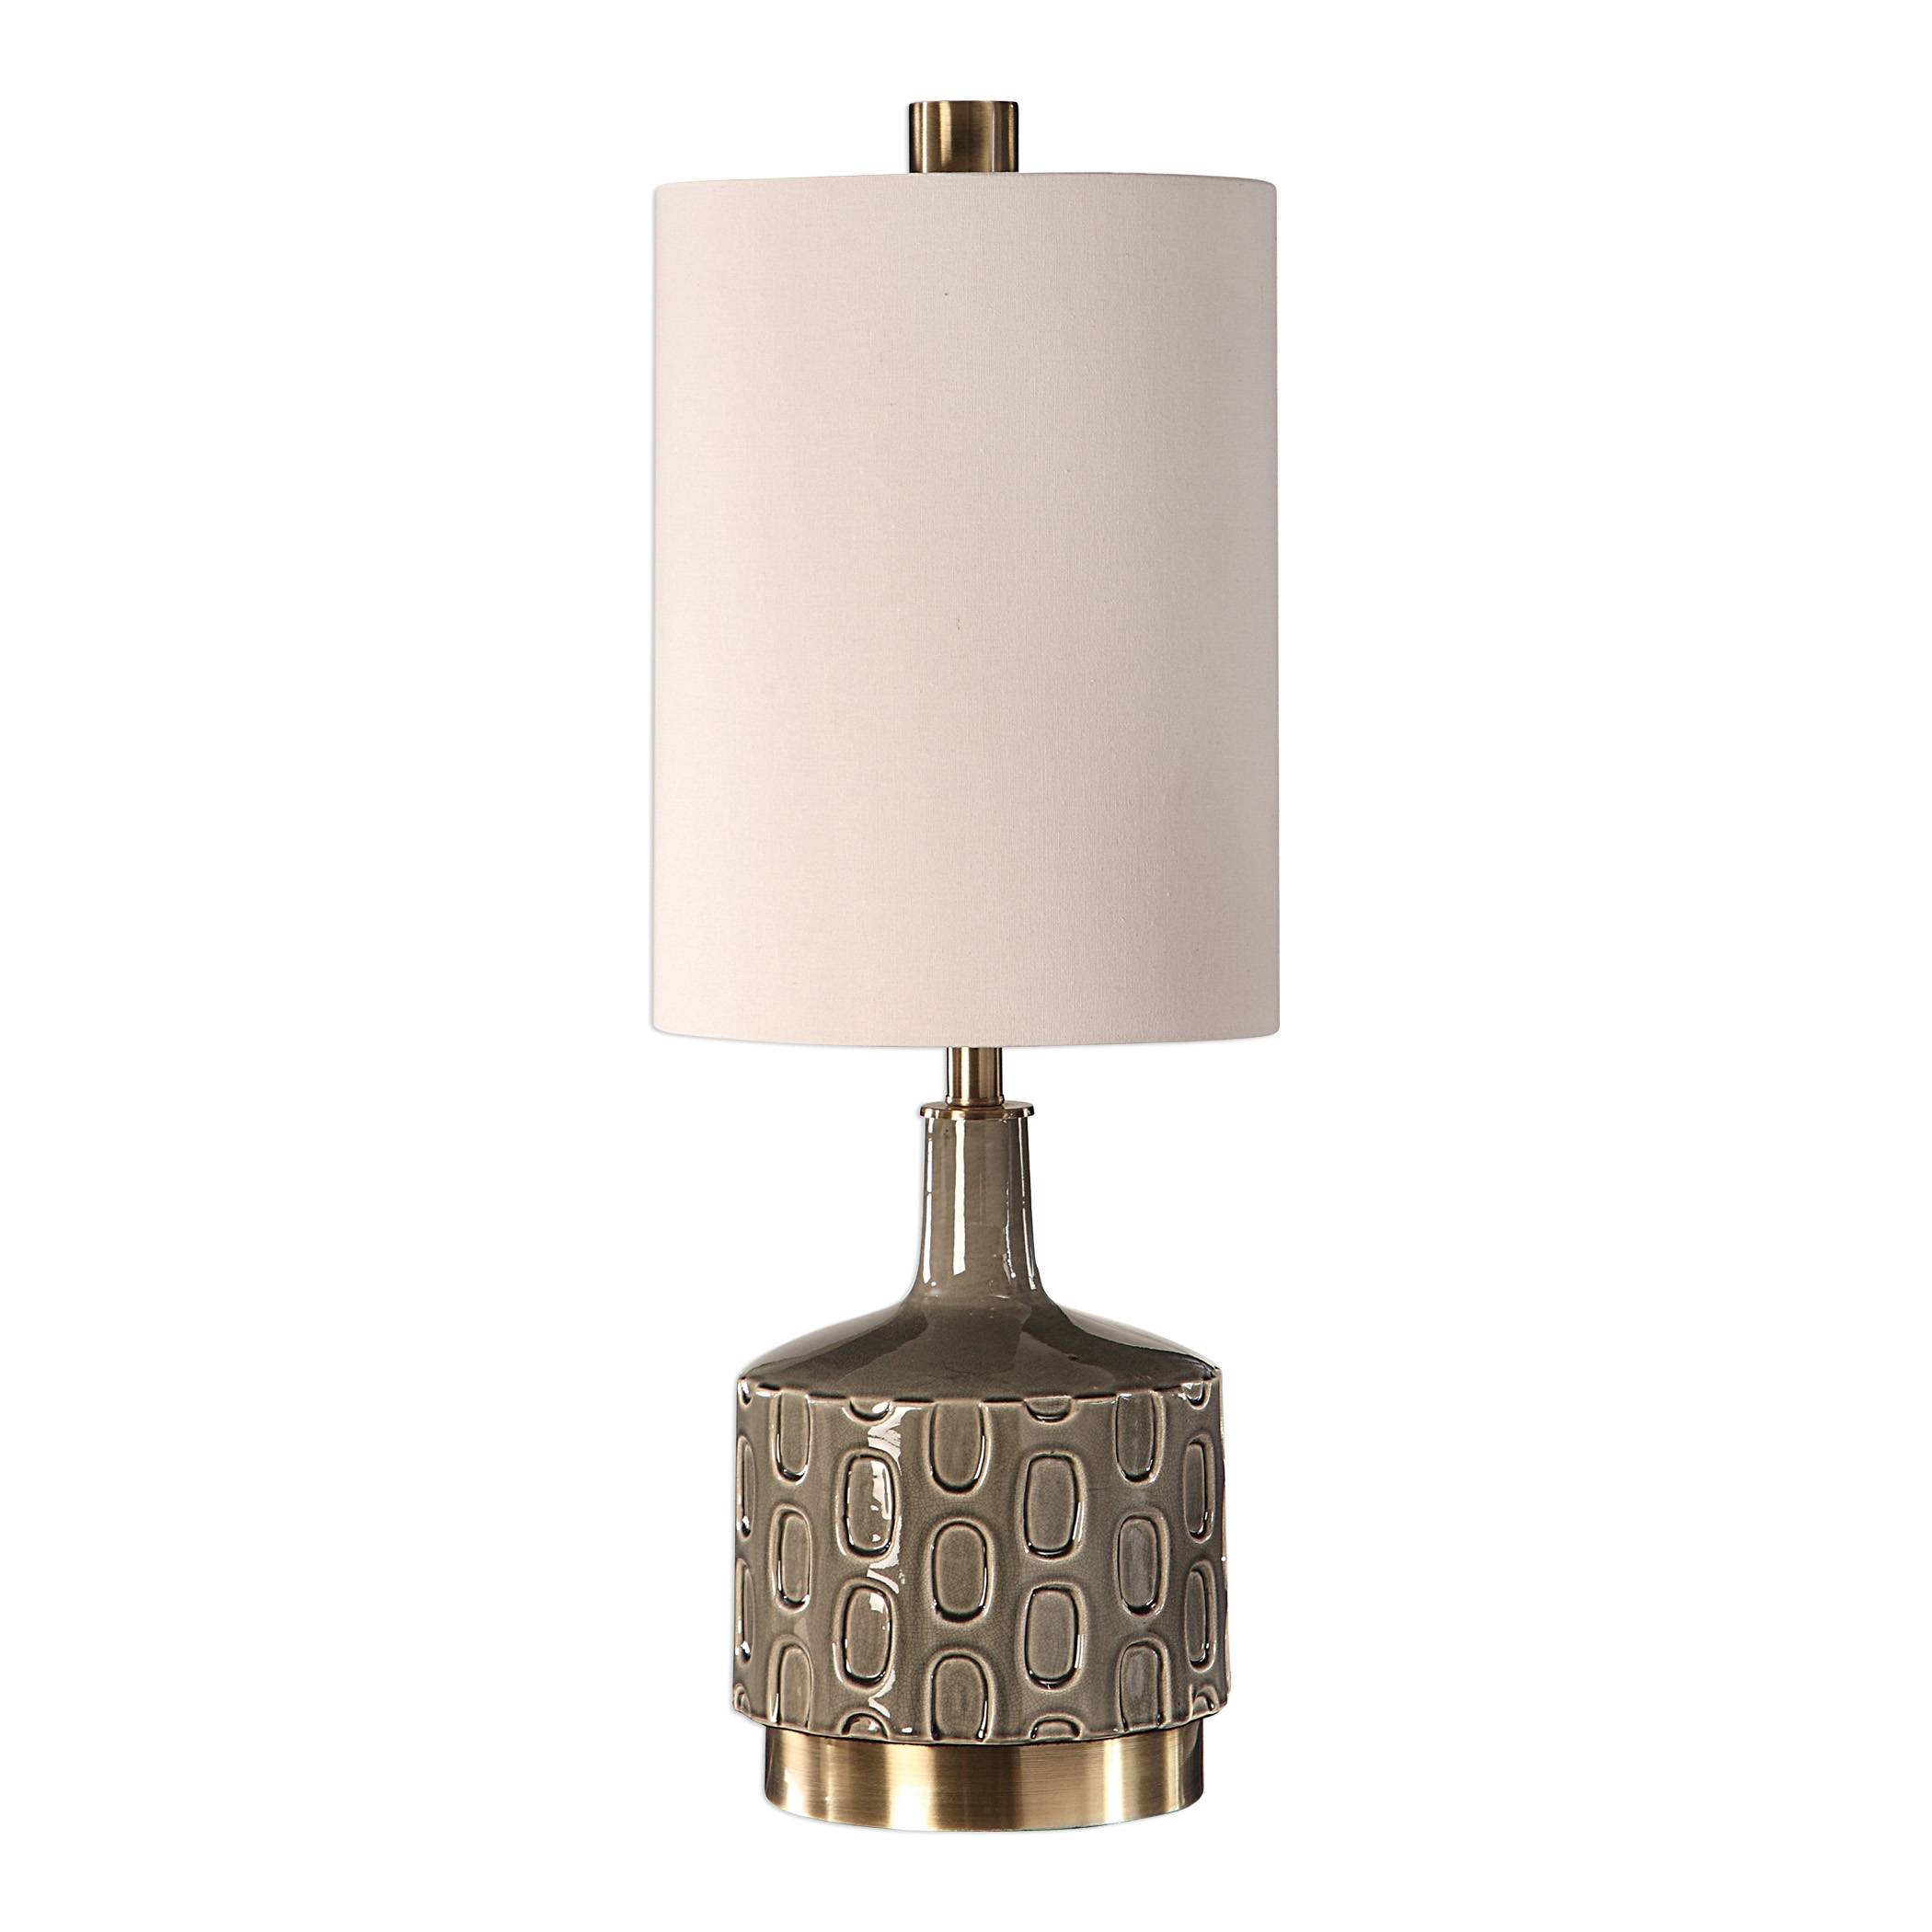 Darrin Gray Table Lamp - Image 4